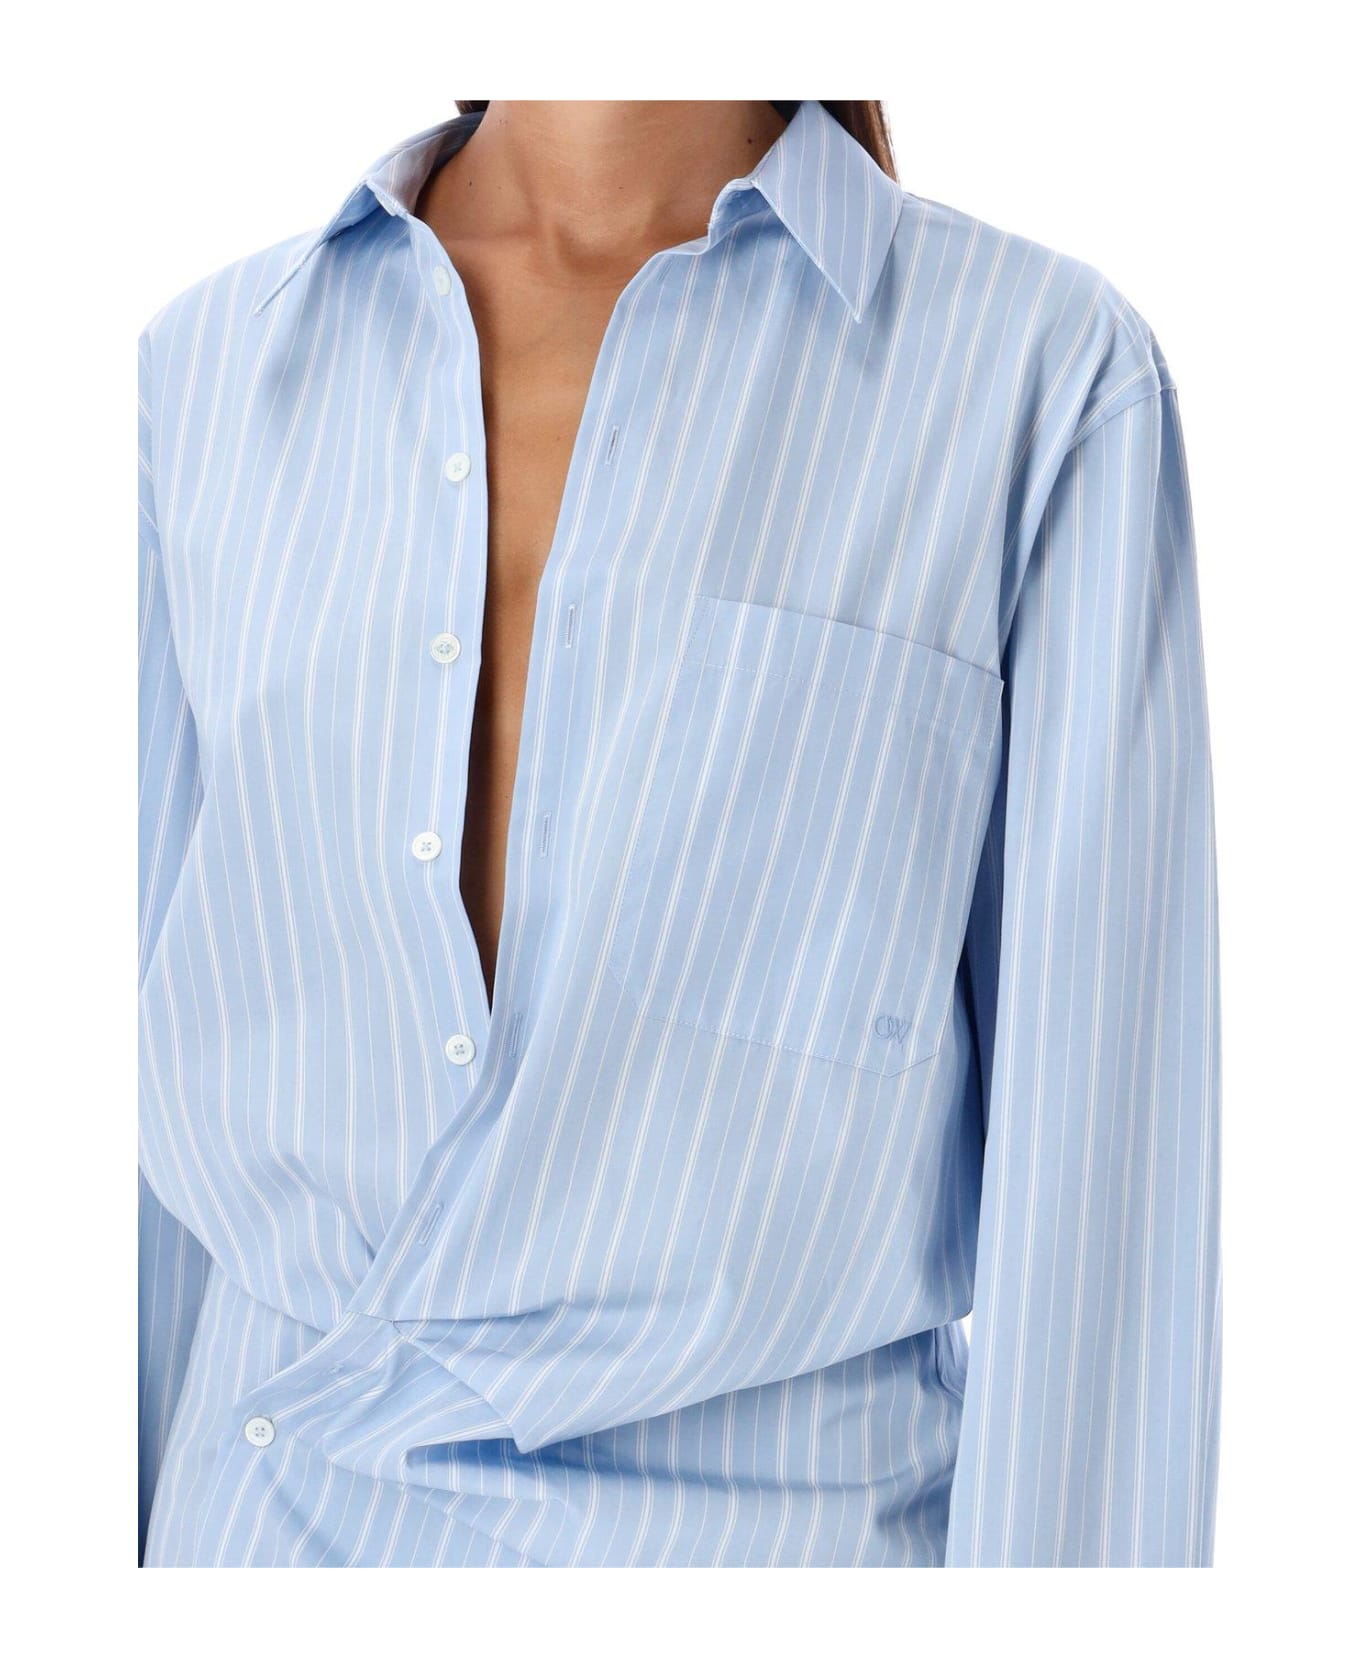 Off-White Stripe Poplin Twist Dress Shirt - Light Blue